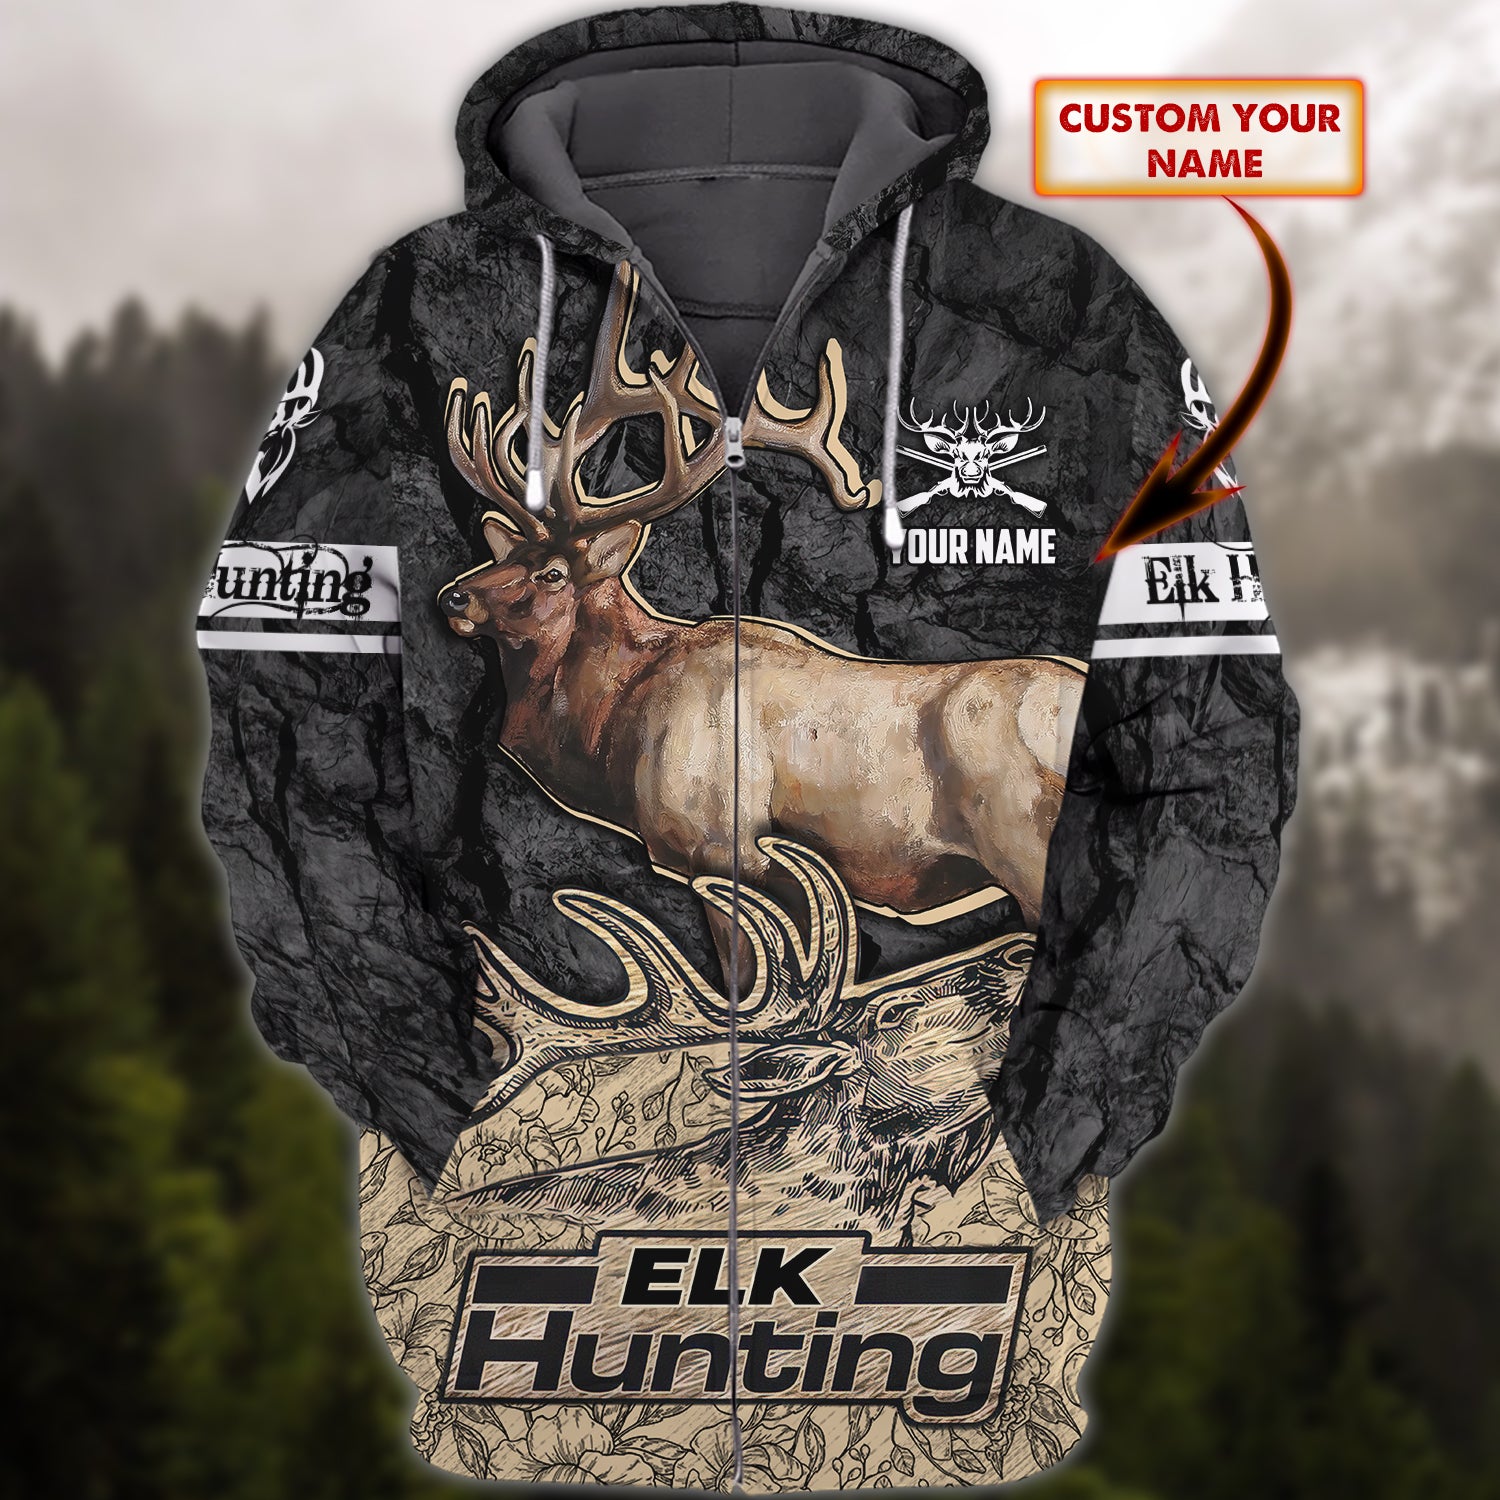 ELK Hunting 068 - Personalized Name 3D Zipper Hoodie - DAT93